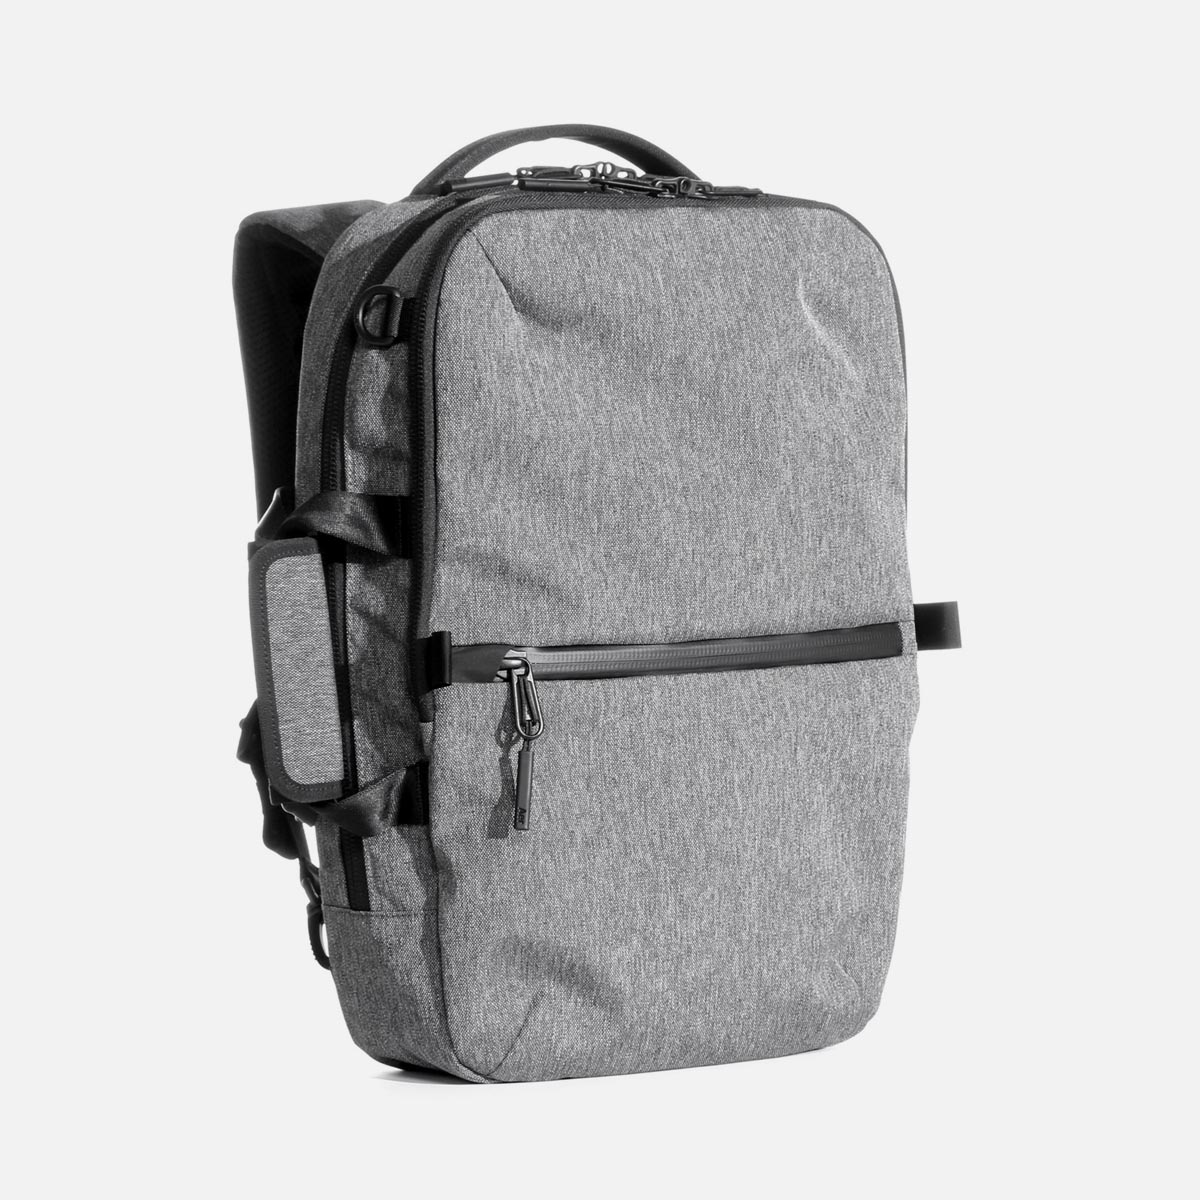 Drifter Ii 17 Inch Laptop Backpack Black Gray Buy At Targus